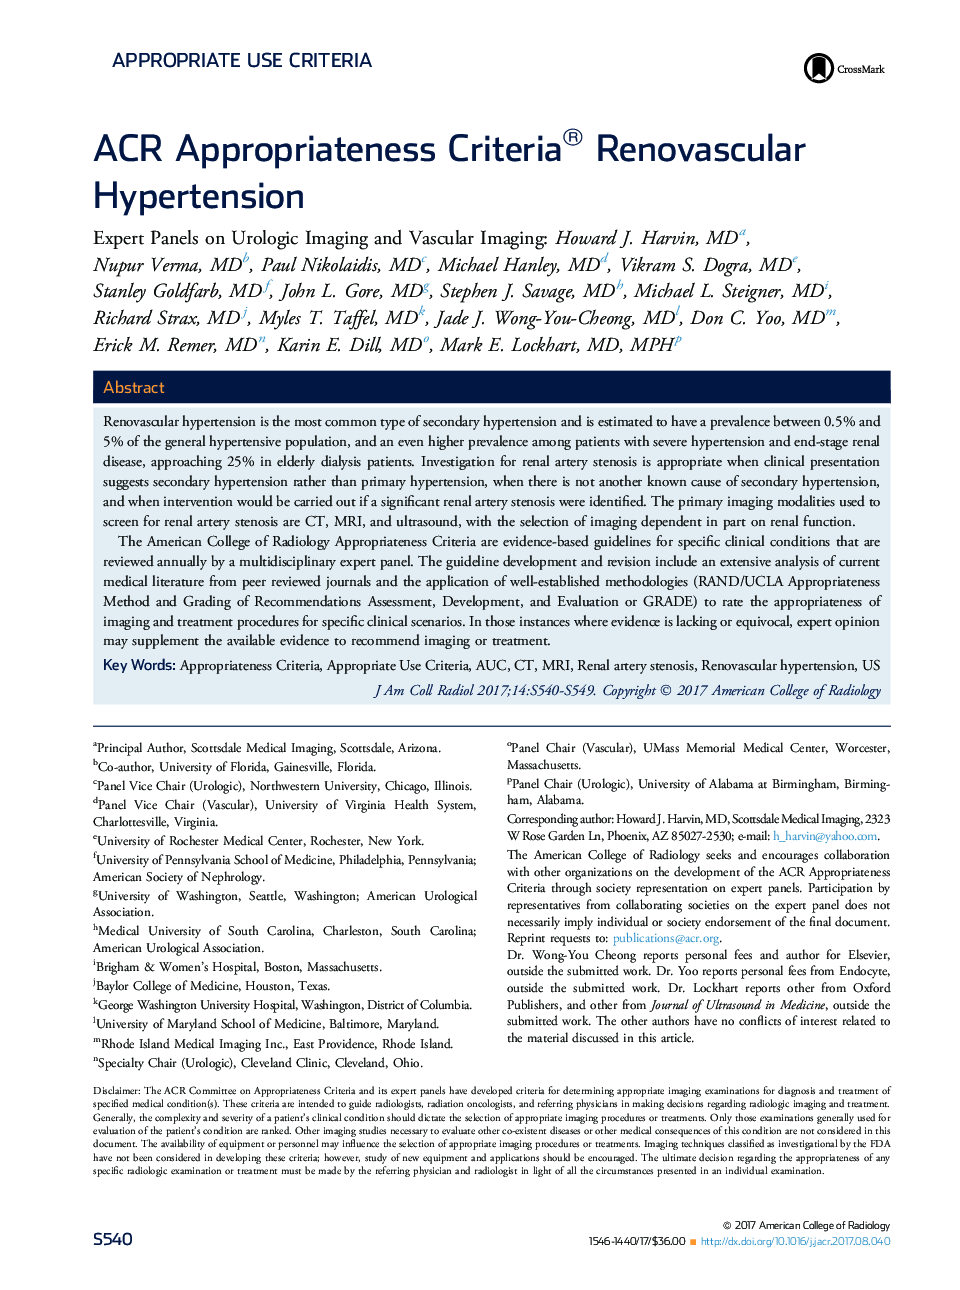 ACR Appropriateness Criteria® Renovascular Hypertension